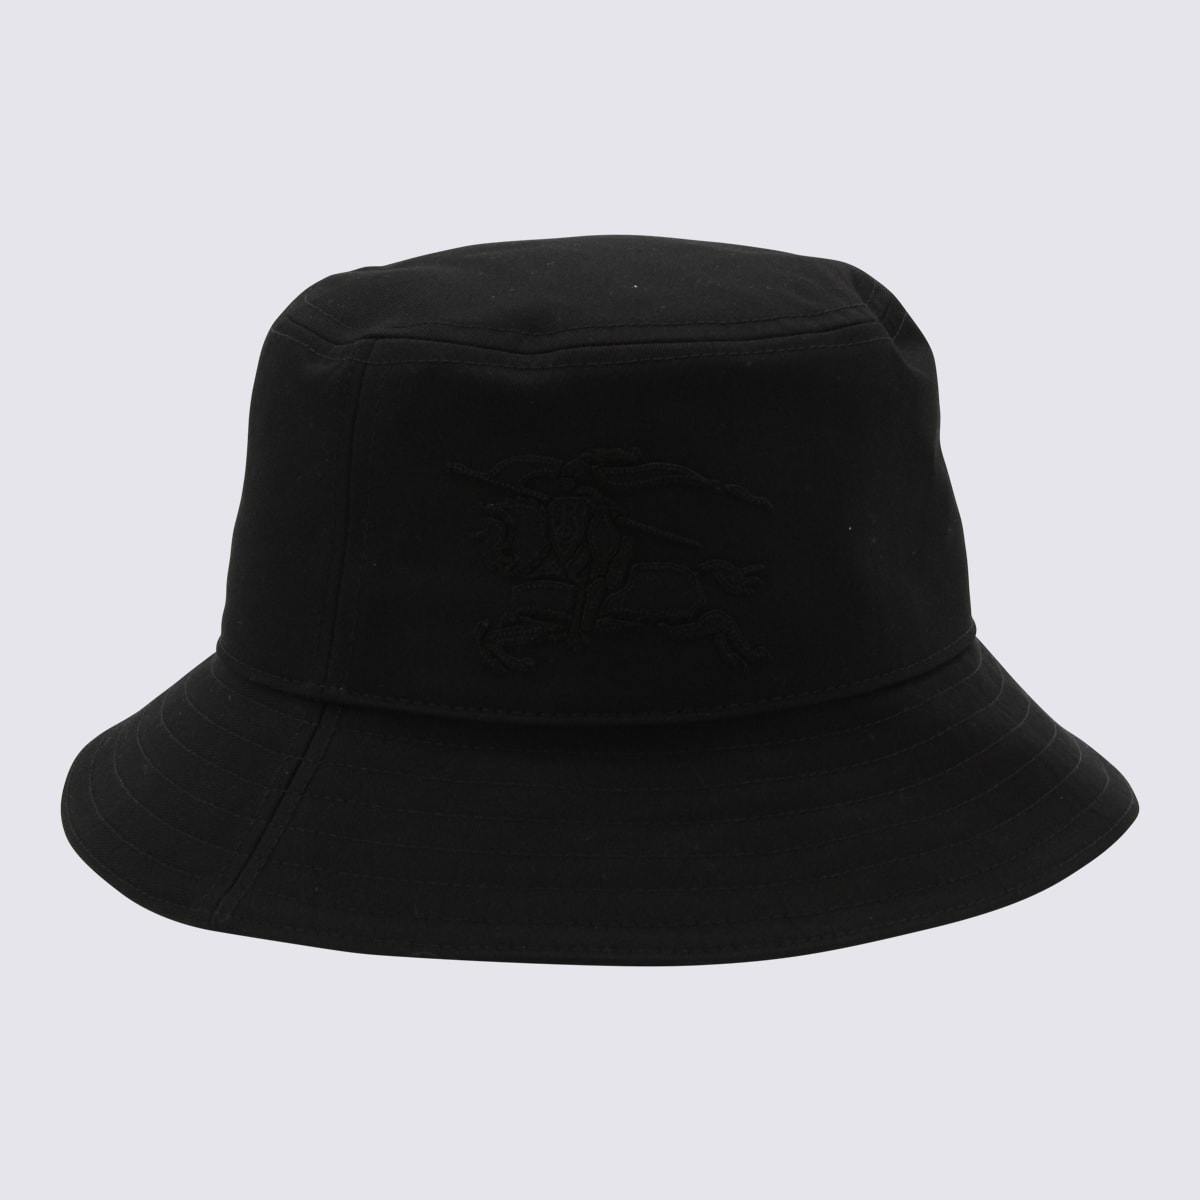 Burberry Black Cotton Blend Bucket Hat